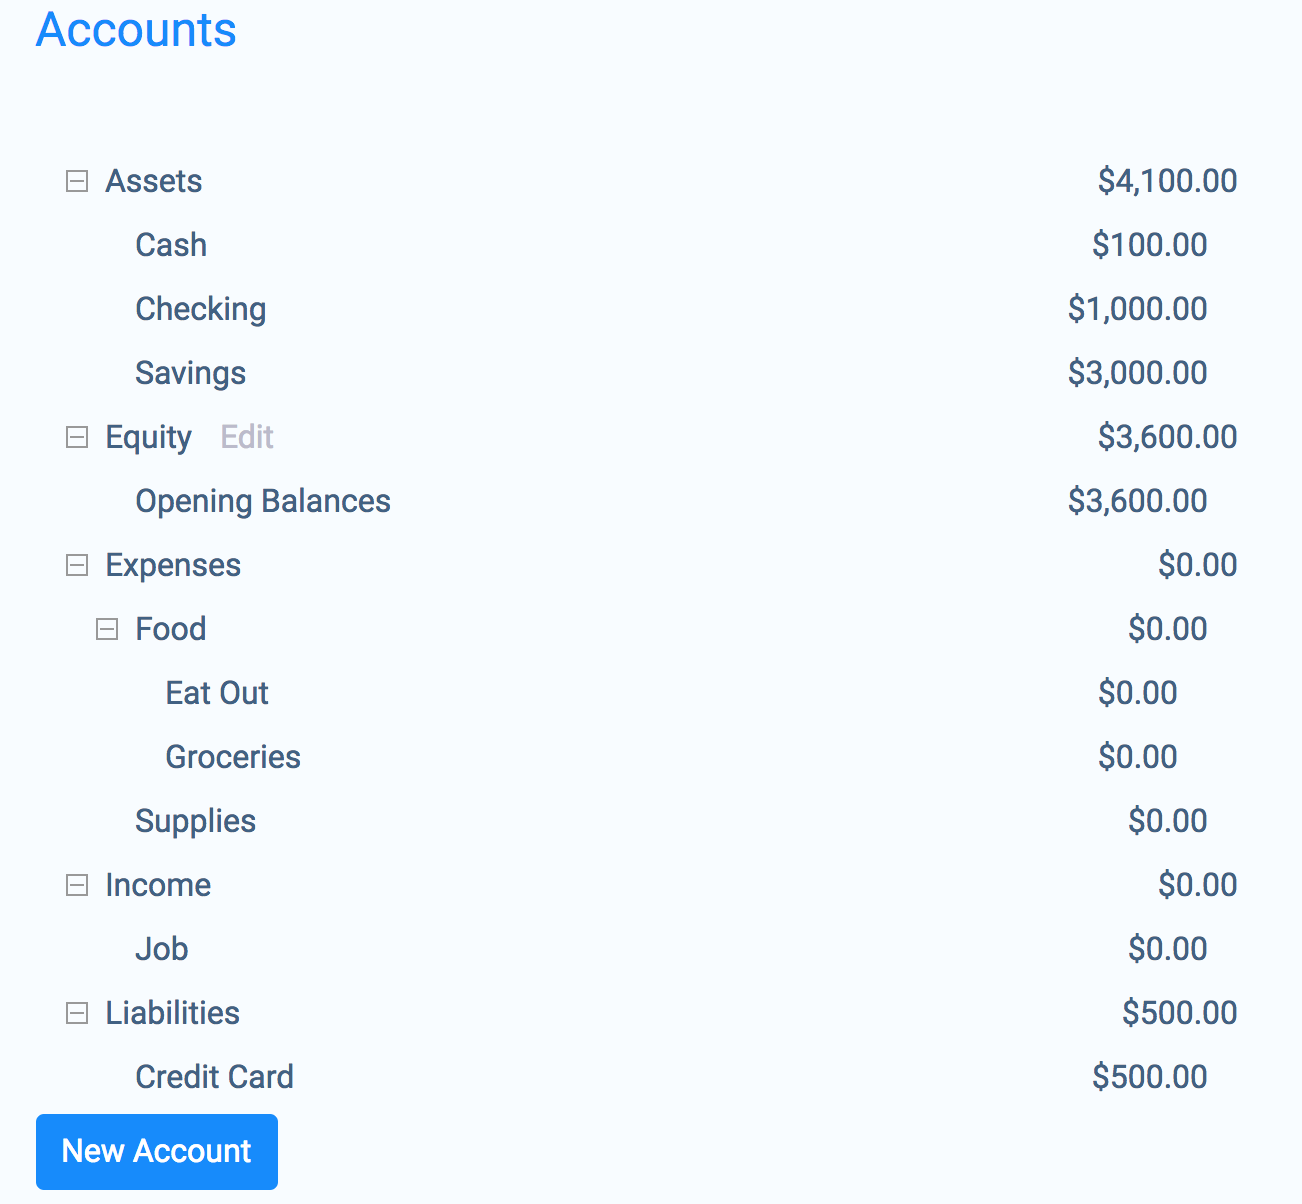 Accounts with balances